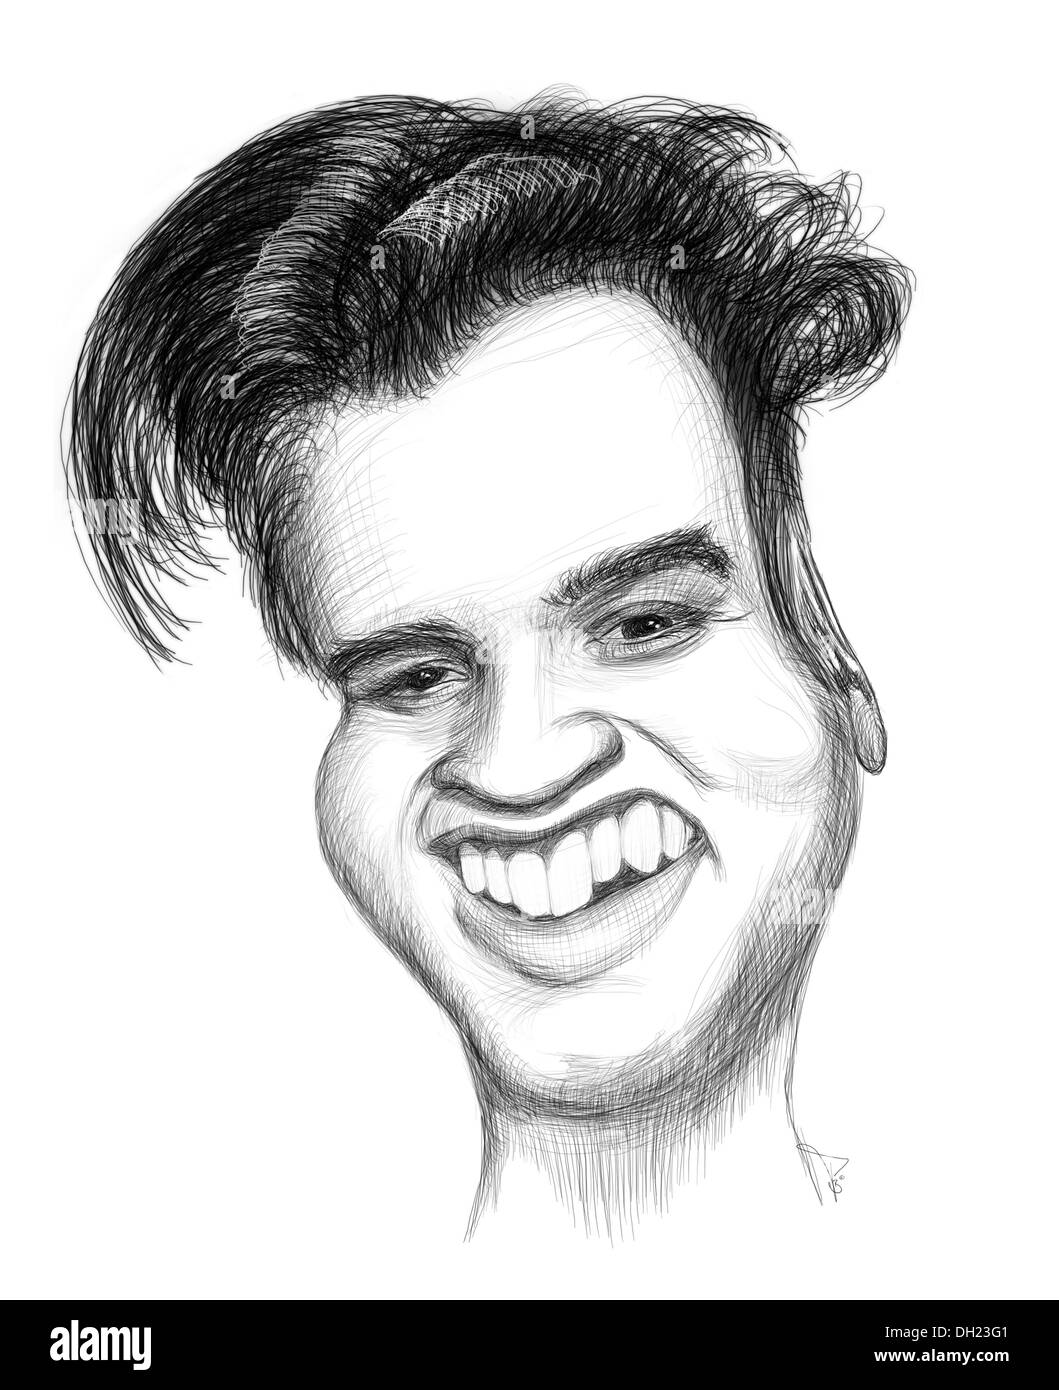 Caricature of Elvis Presley Stock Photo - Alamy